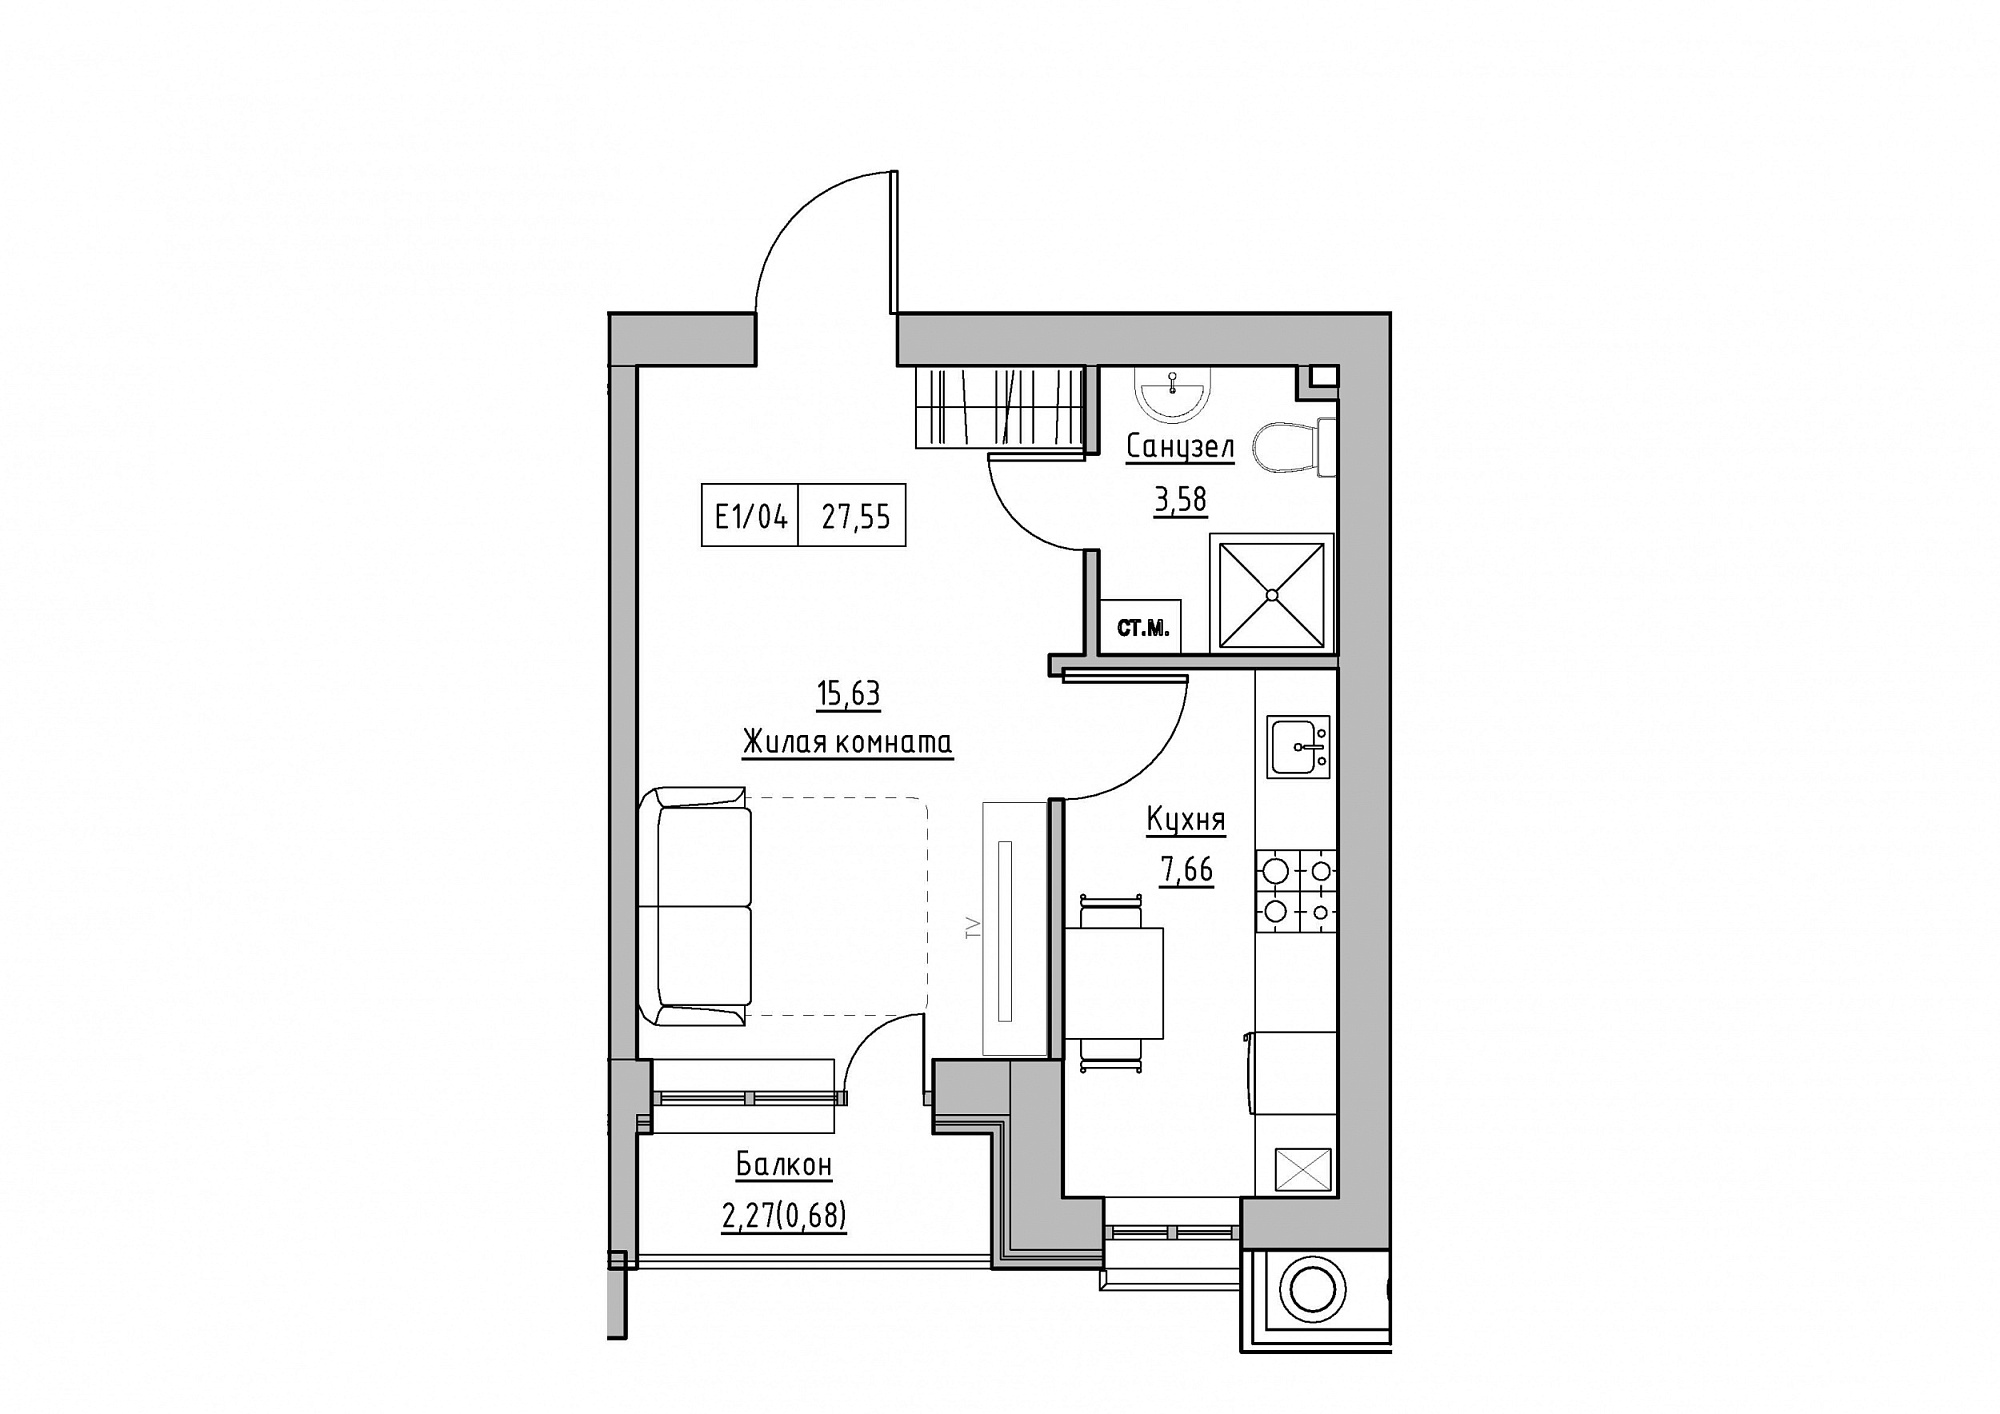 Planning 1-rm flats area 27.55m2, KS-012-05/0007.